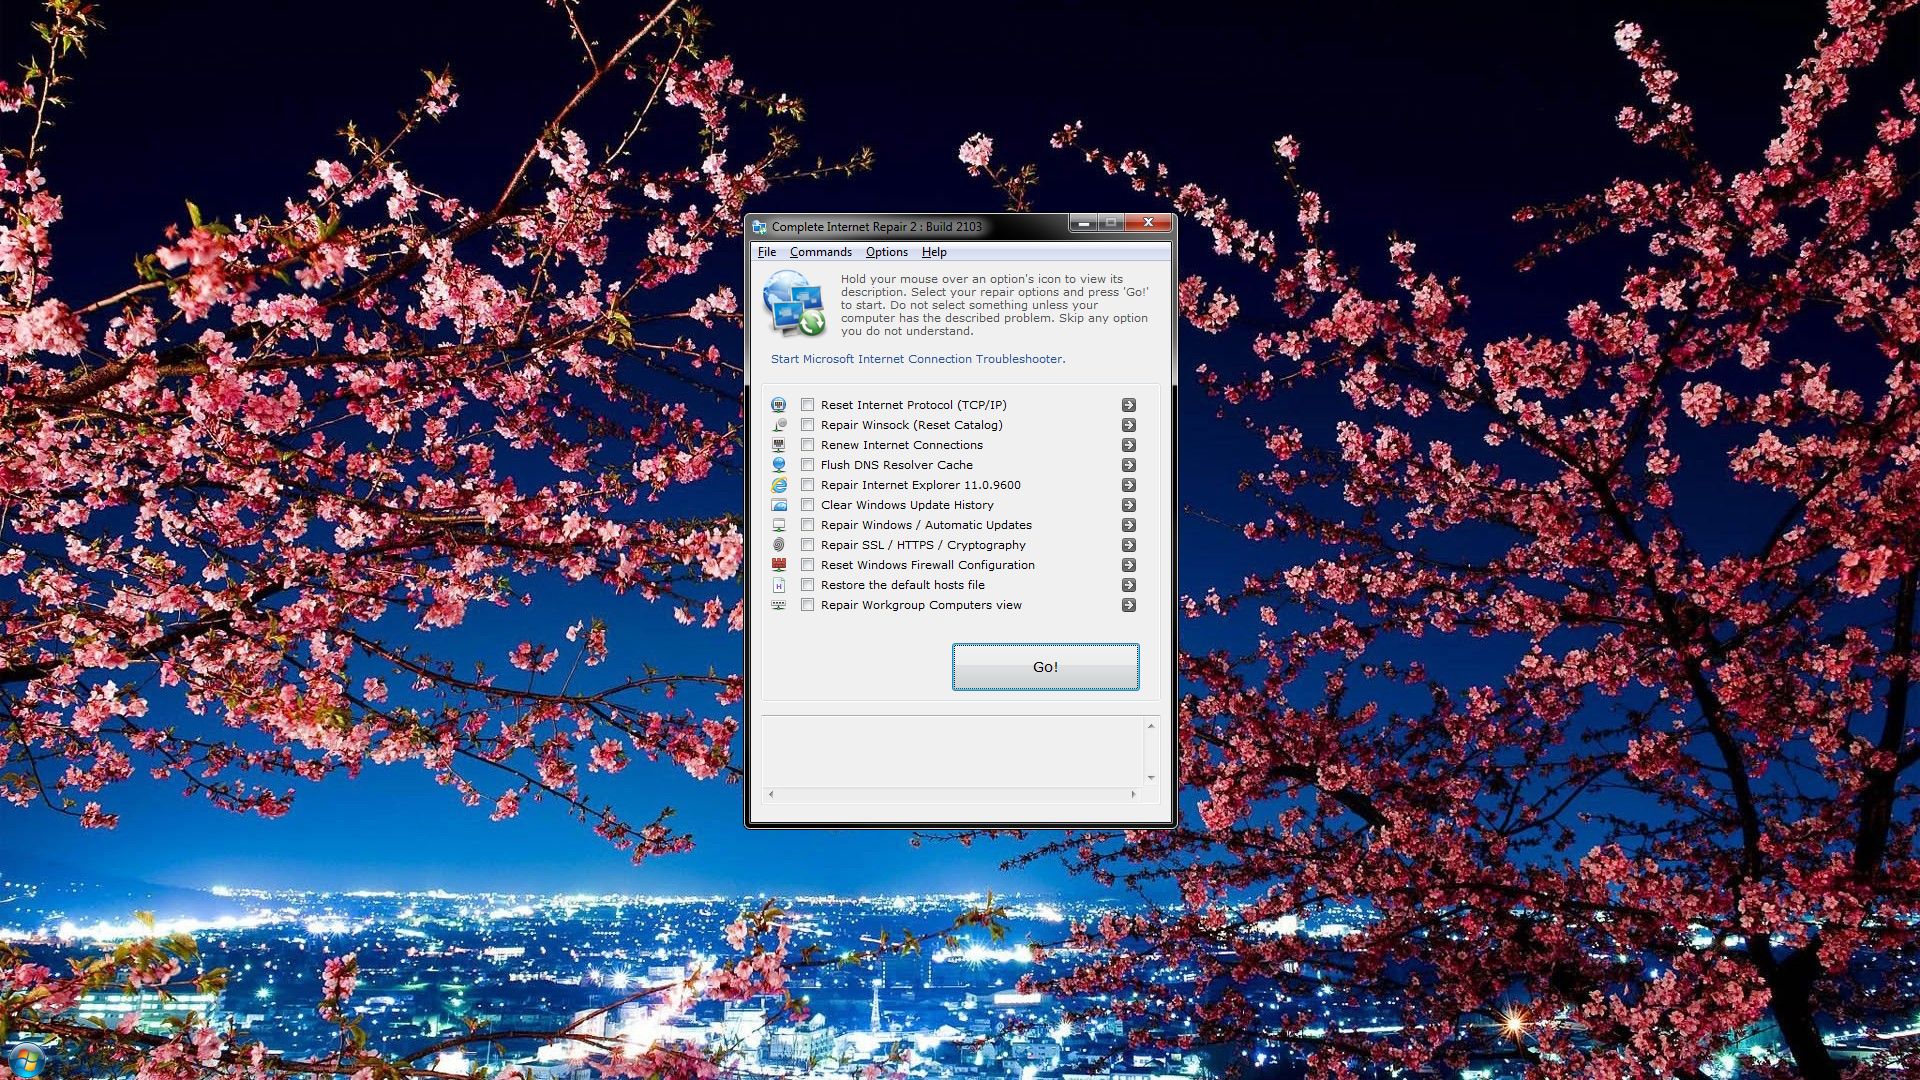 Complete Internet Repair 9.1.3.6335 instal the last version for mac